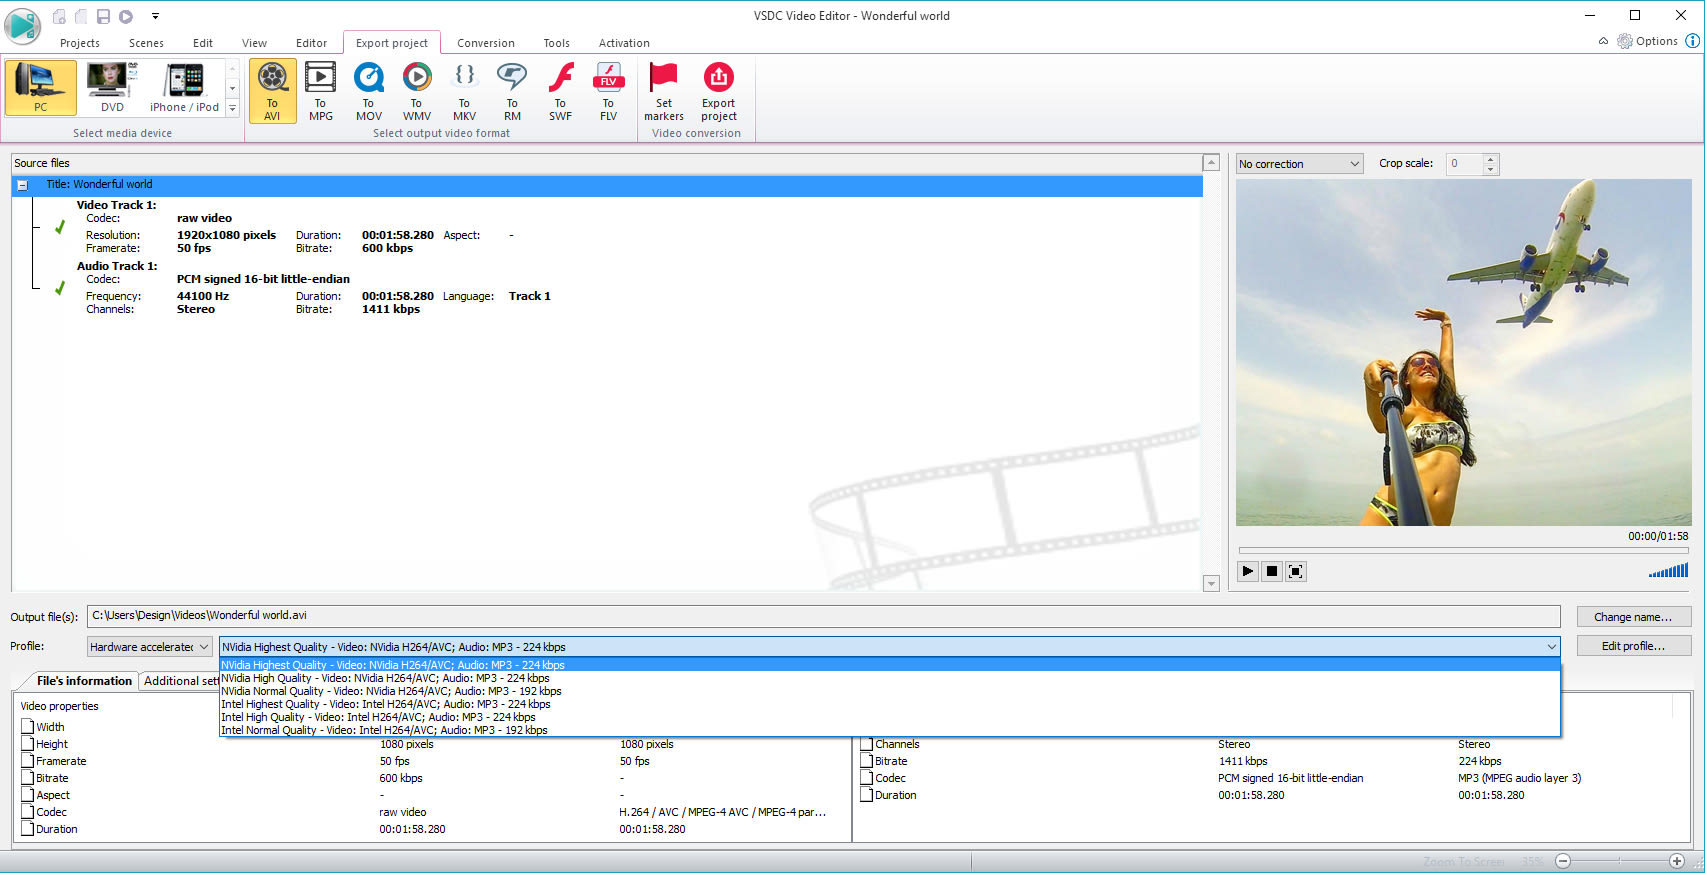 vsdc free video editor tutorial subtitles